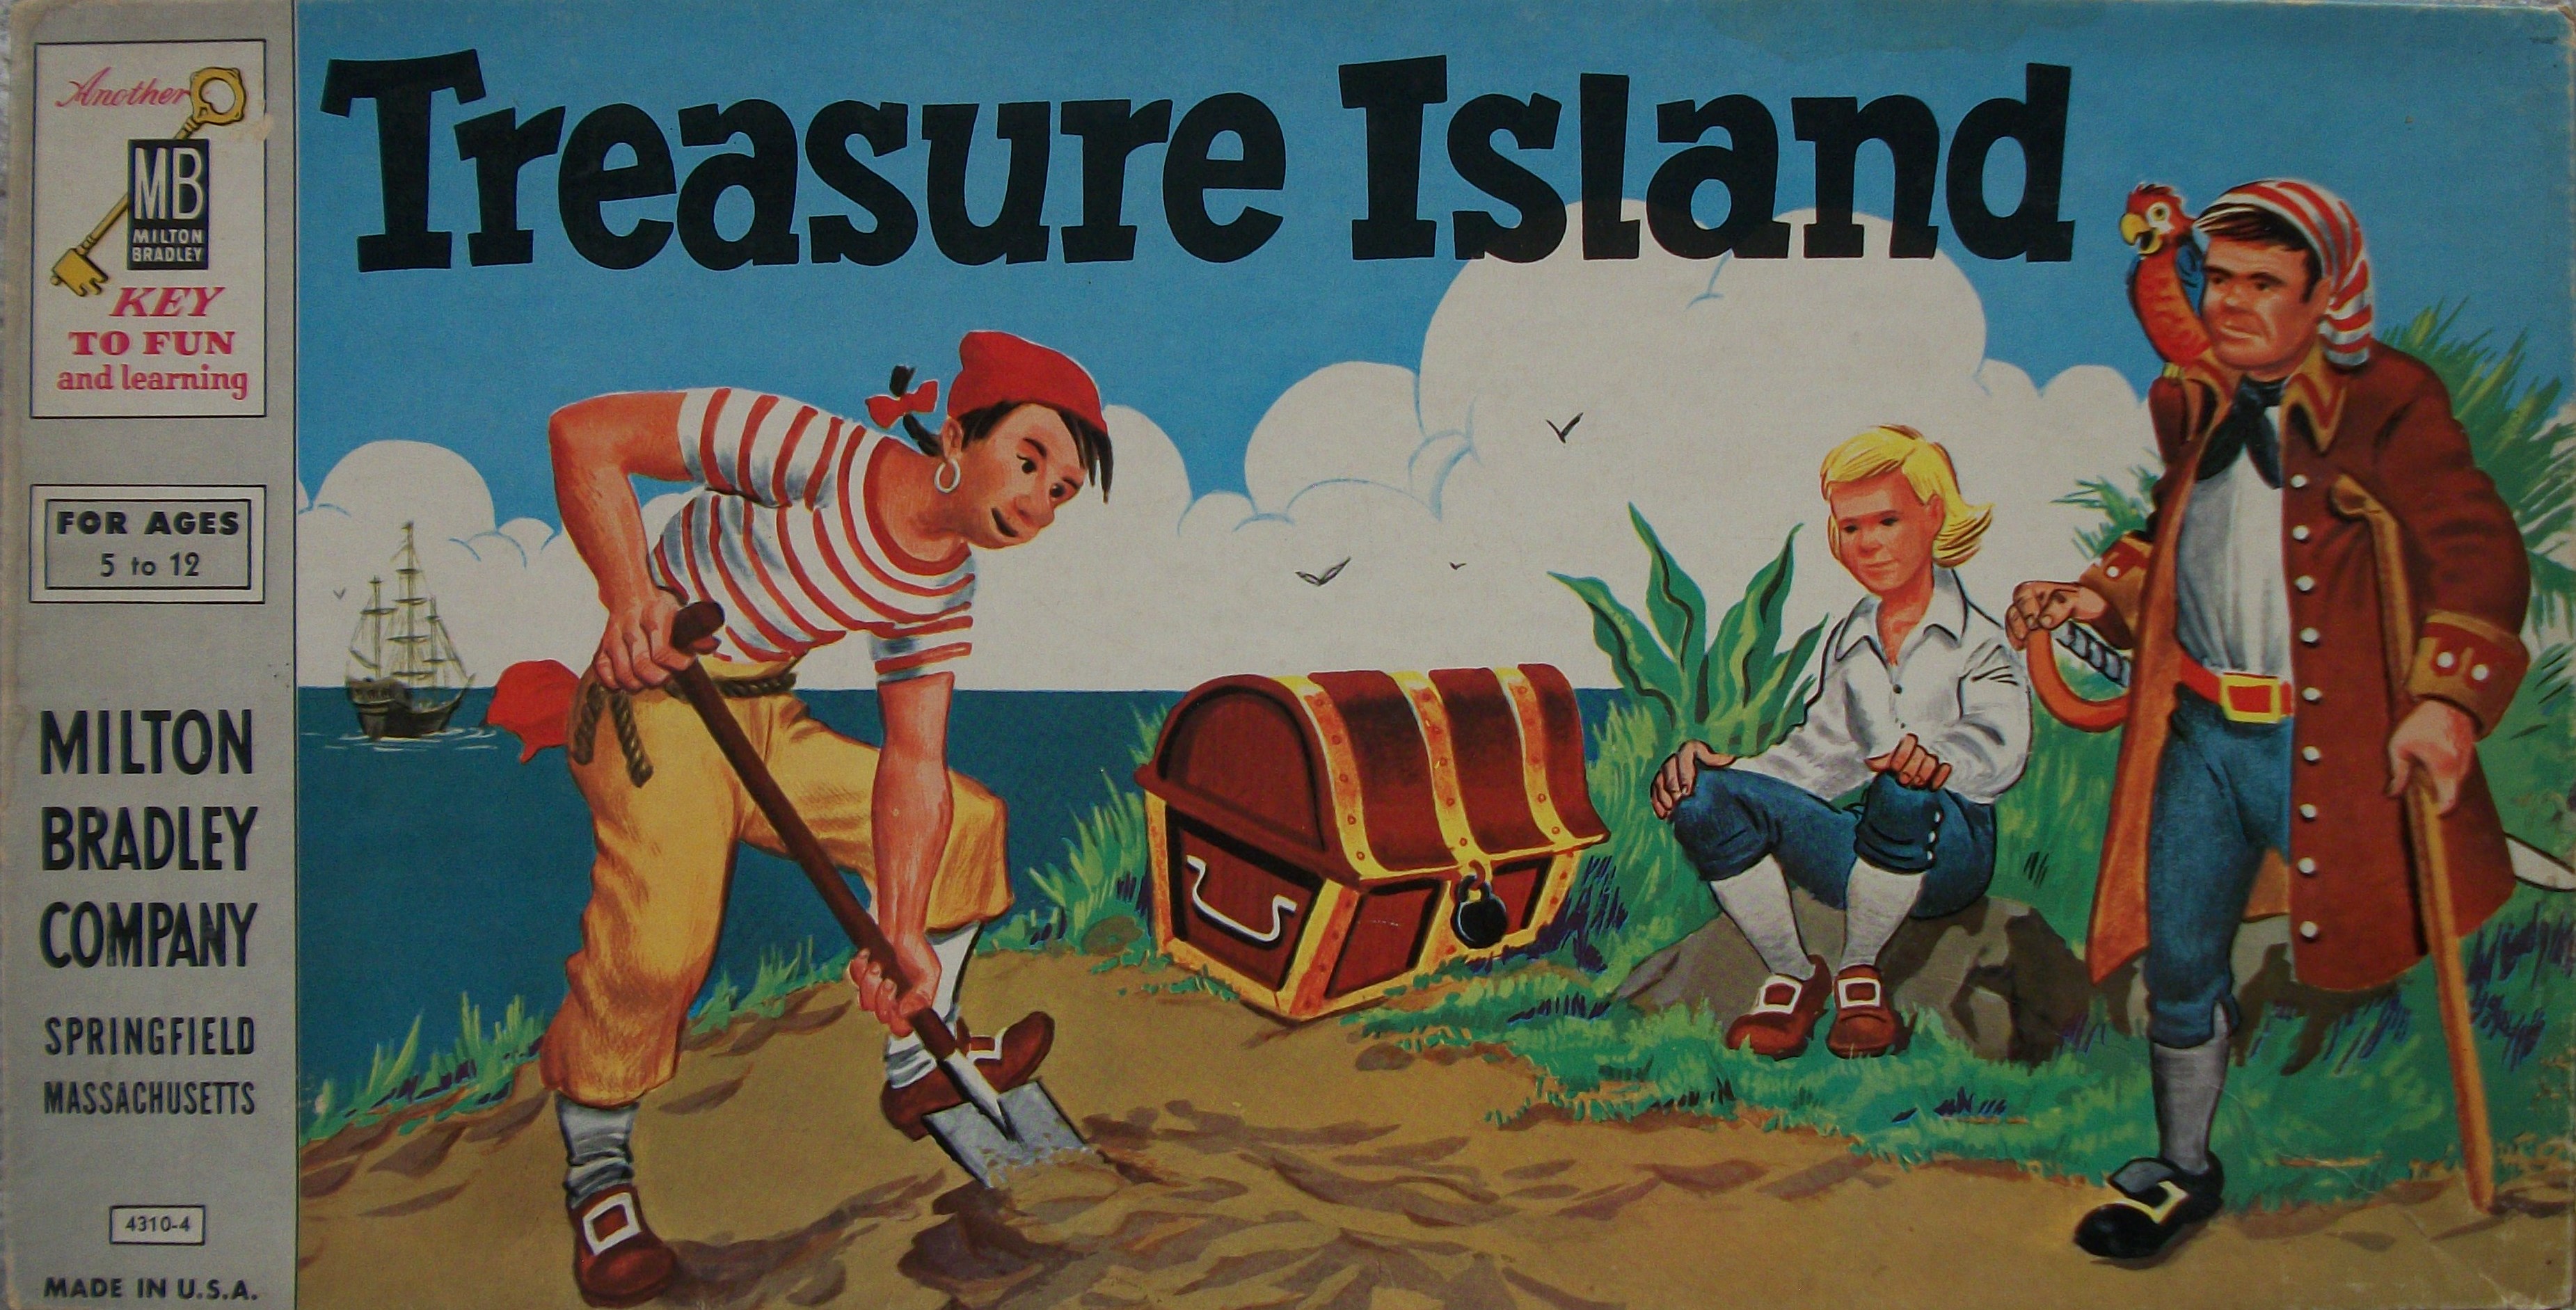 Milton Bradleys Old Board Game Of Treasure Island